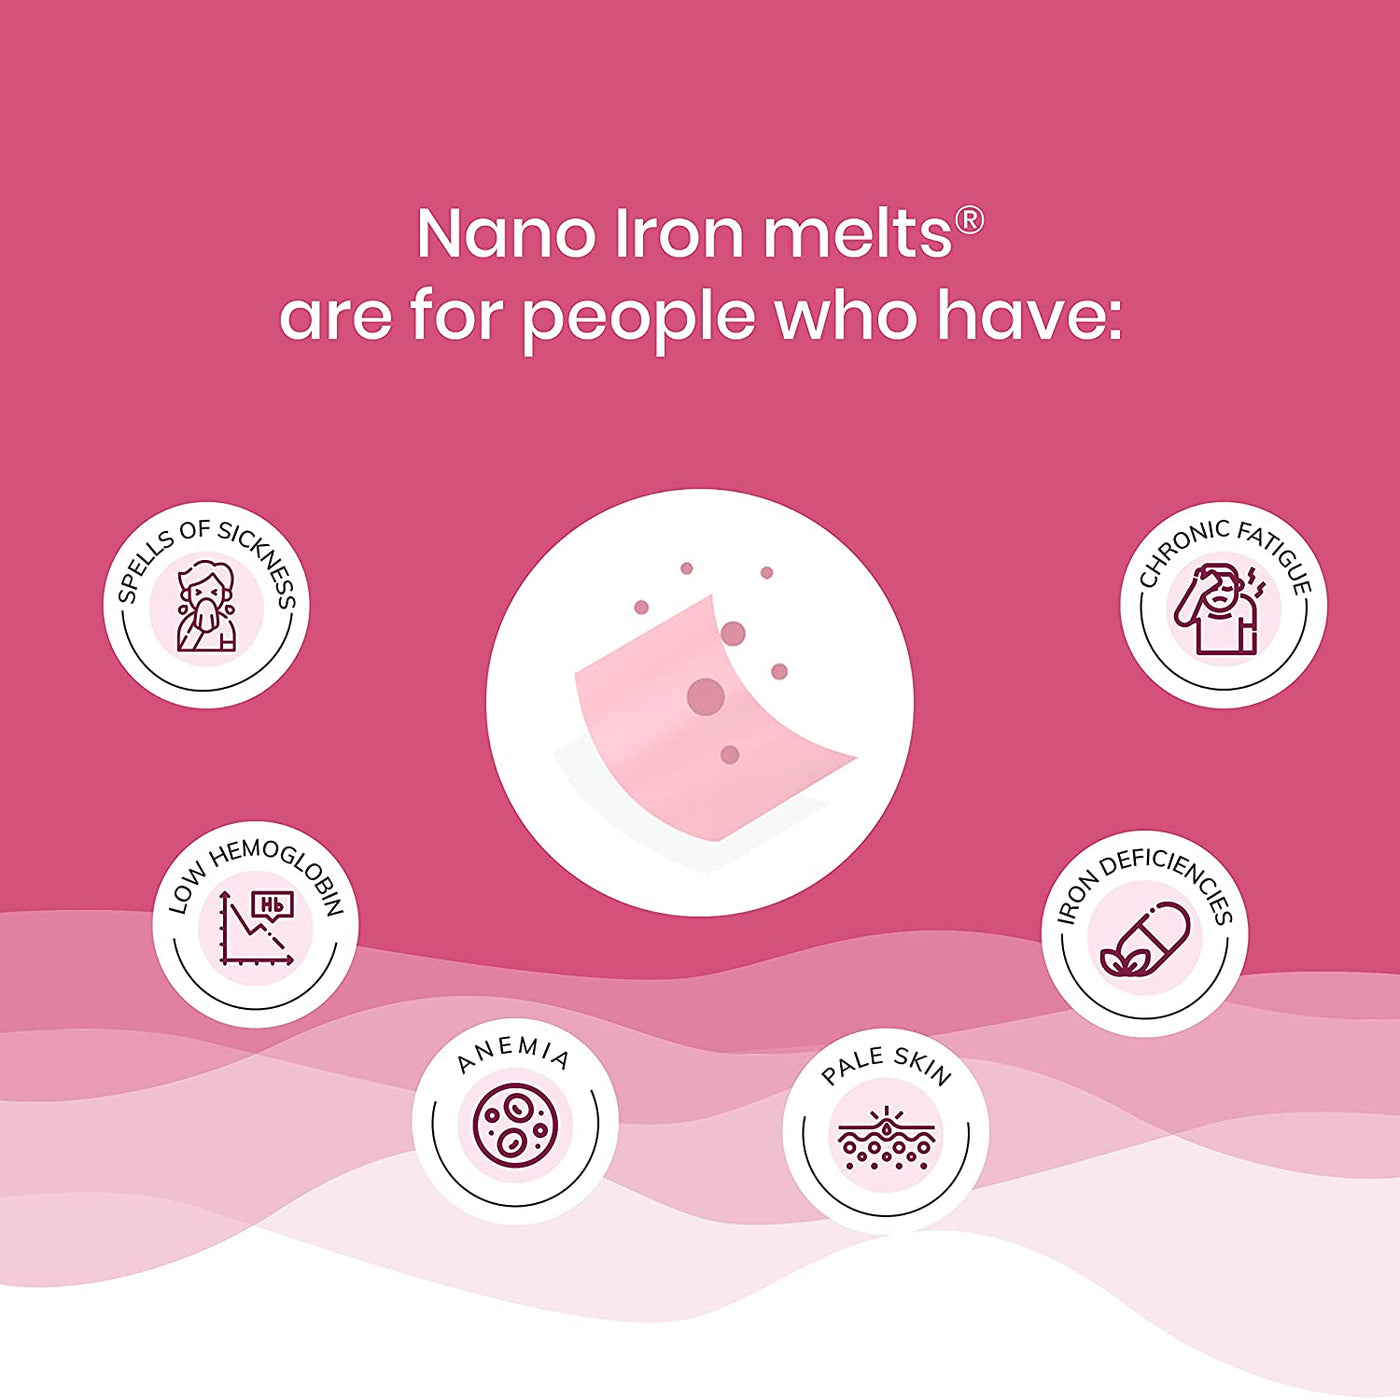 Melts® Nano Iron